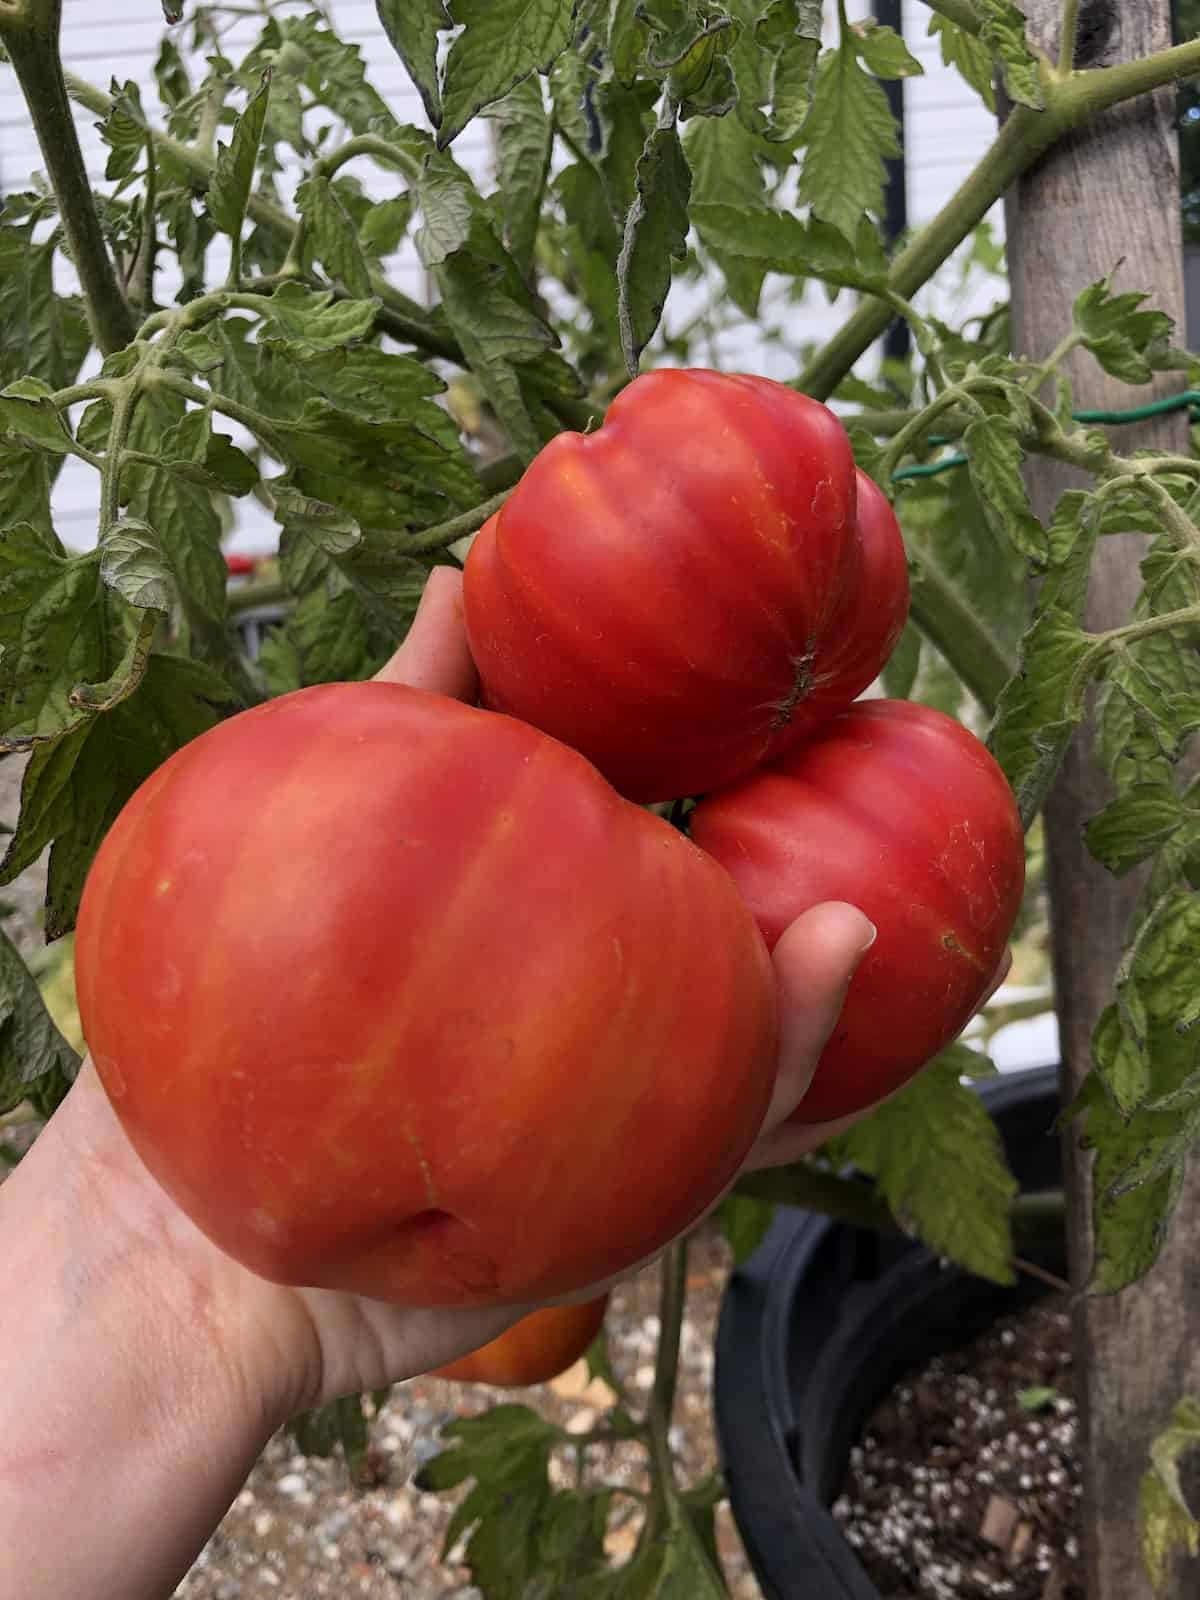 Harvesting ripe tomatoes in september